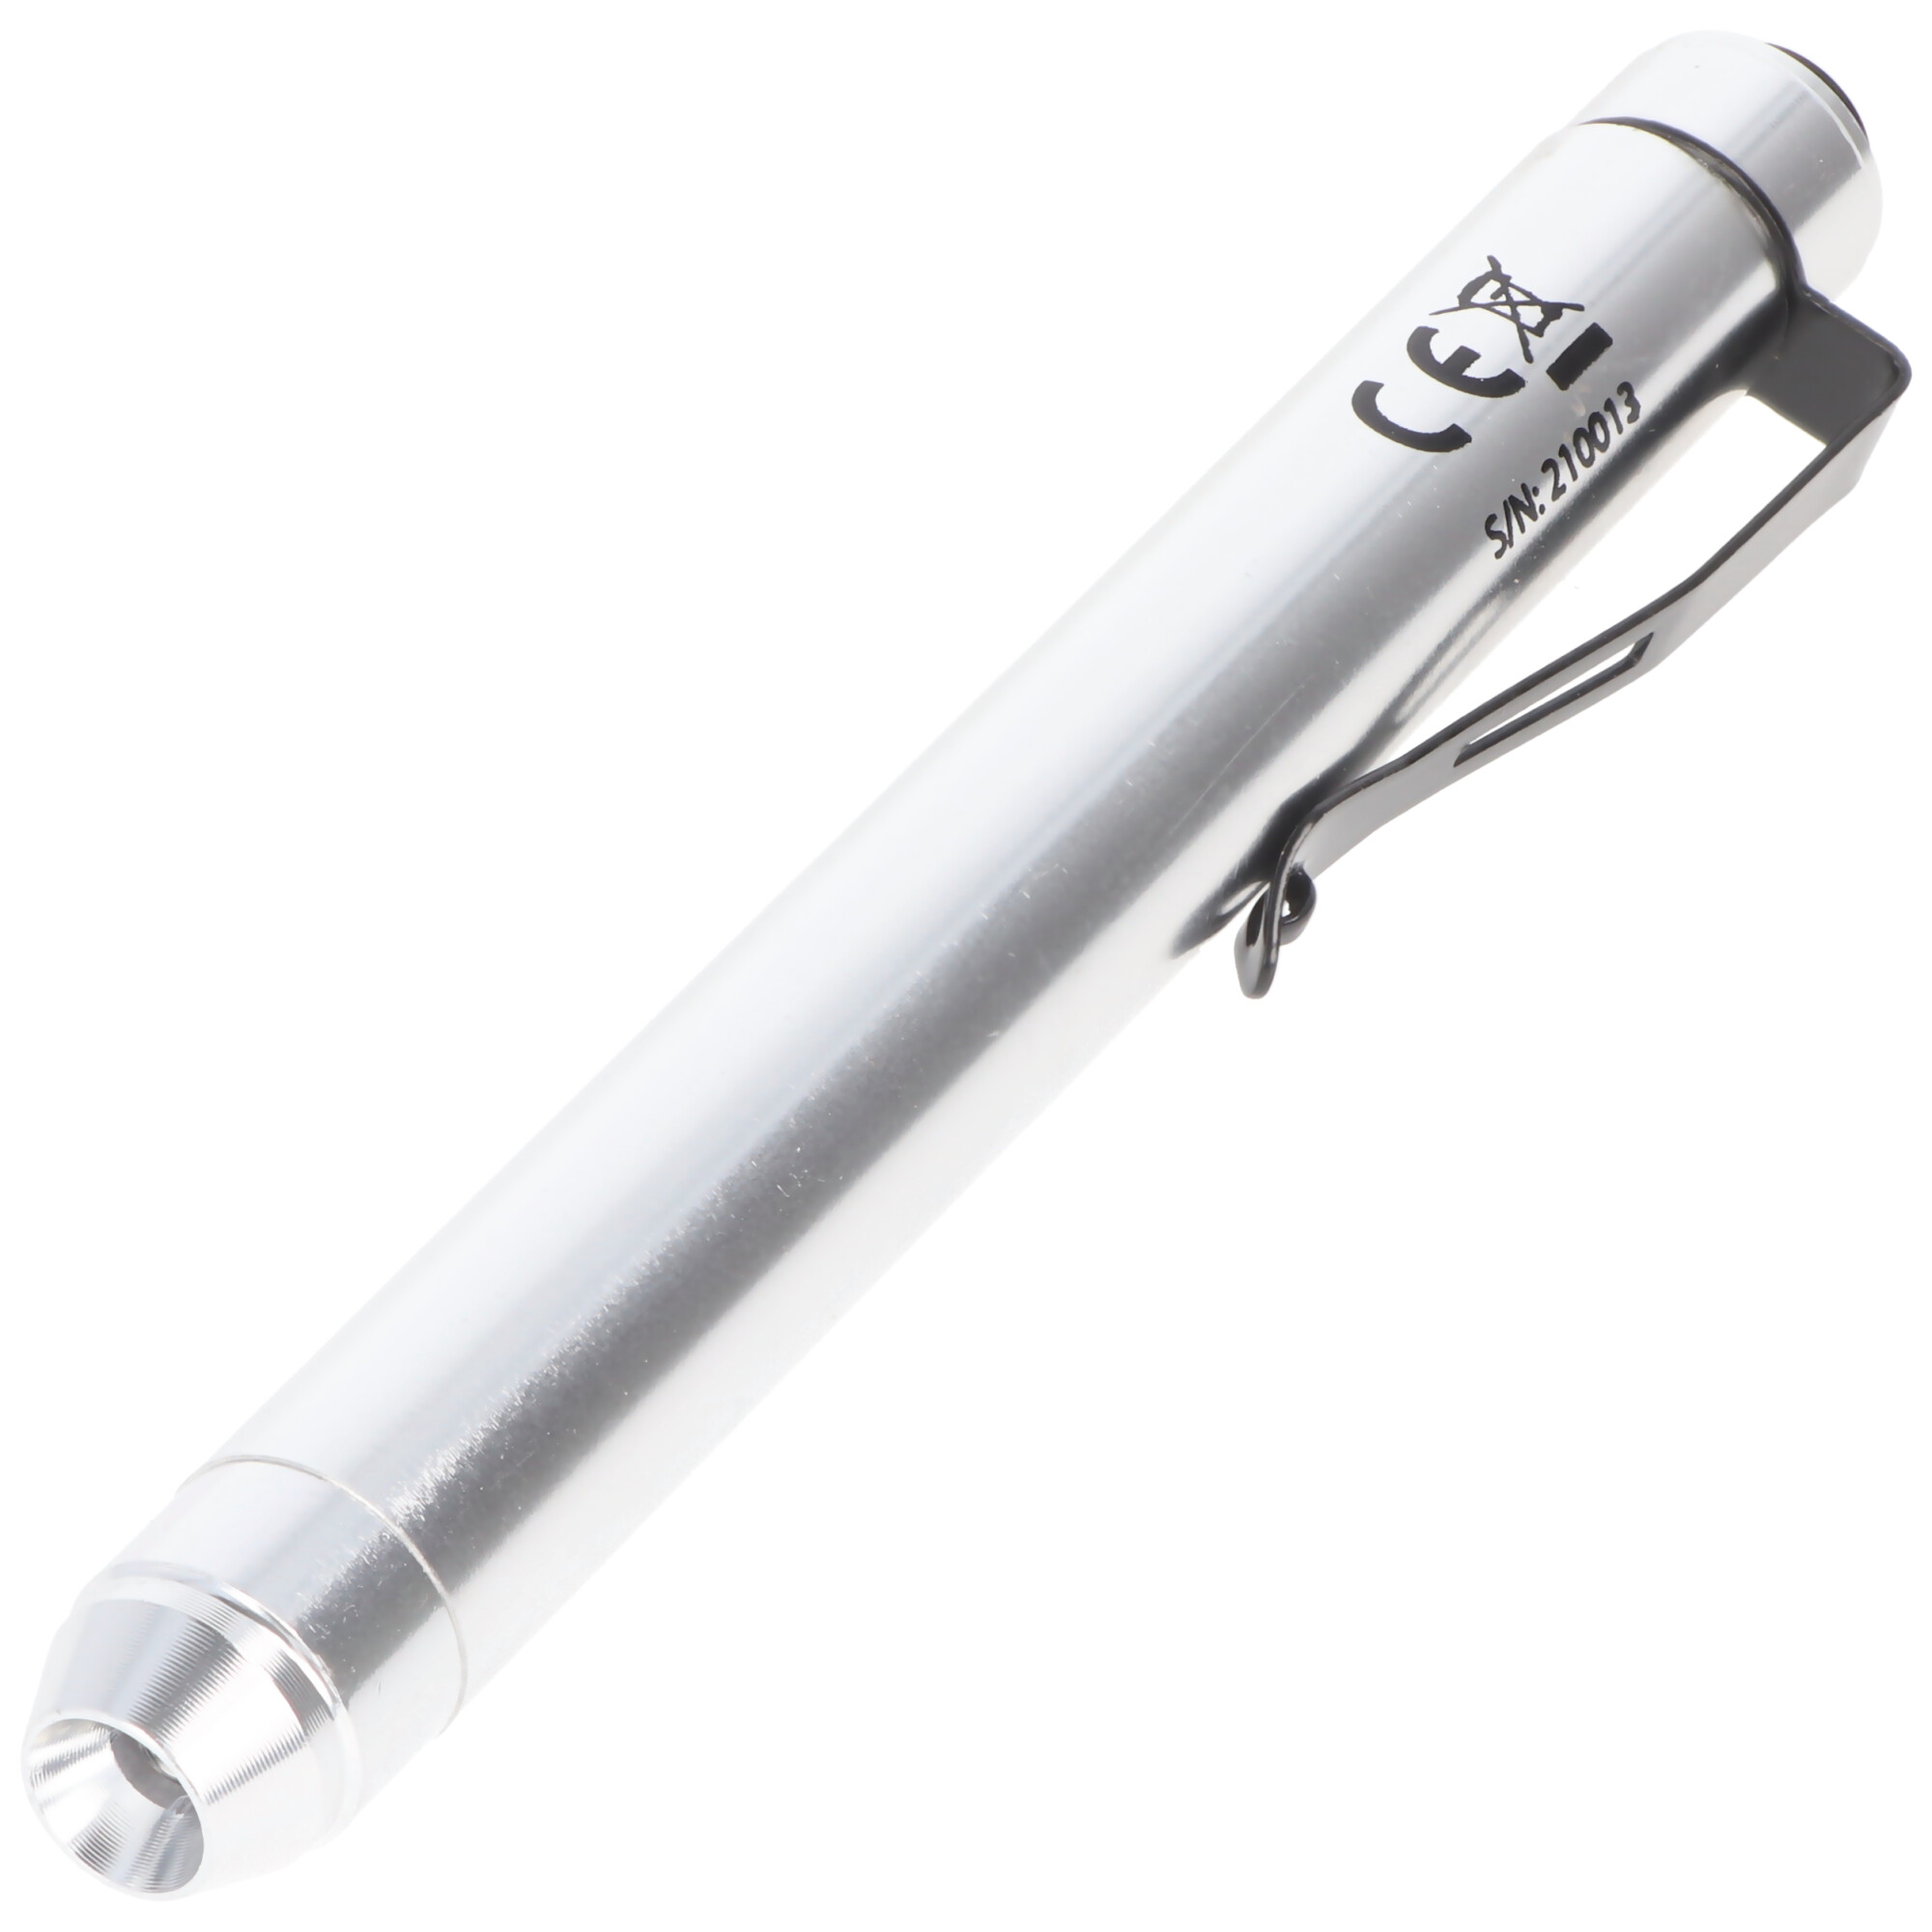 Velamp PENLITE LED Stiftleuchte 0,5W LED, Stift für Tablet, Smartphone, Aluminium, Lieferung ohne Batterien